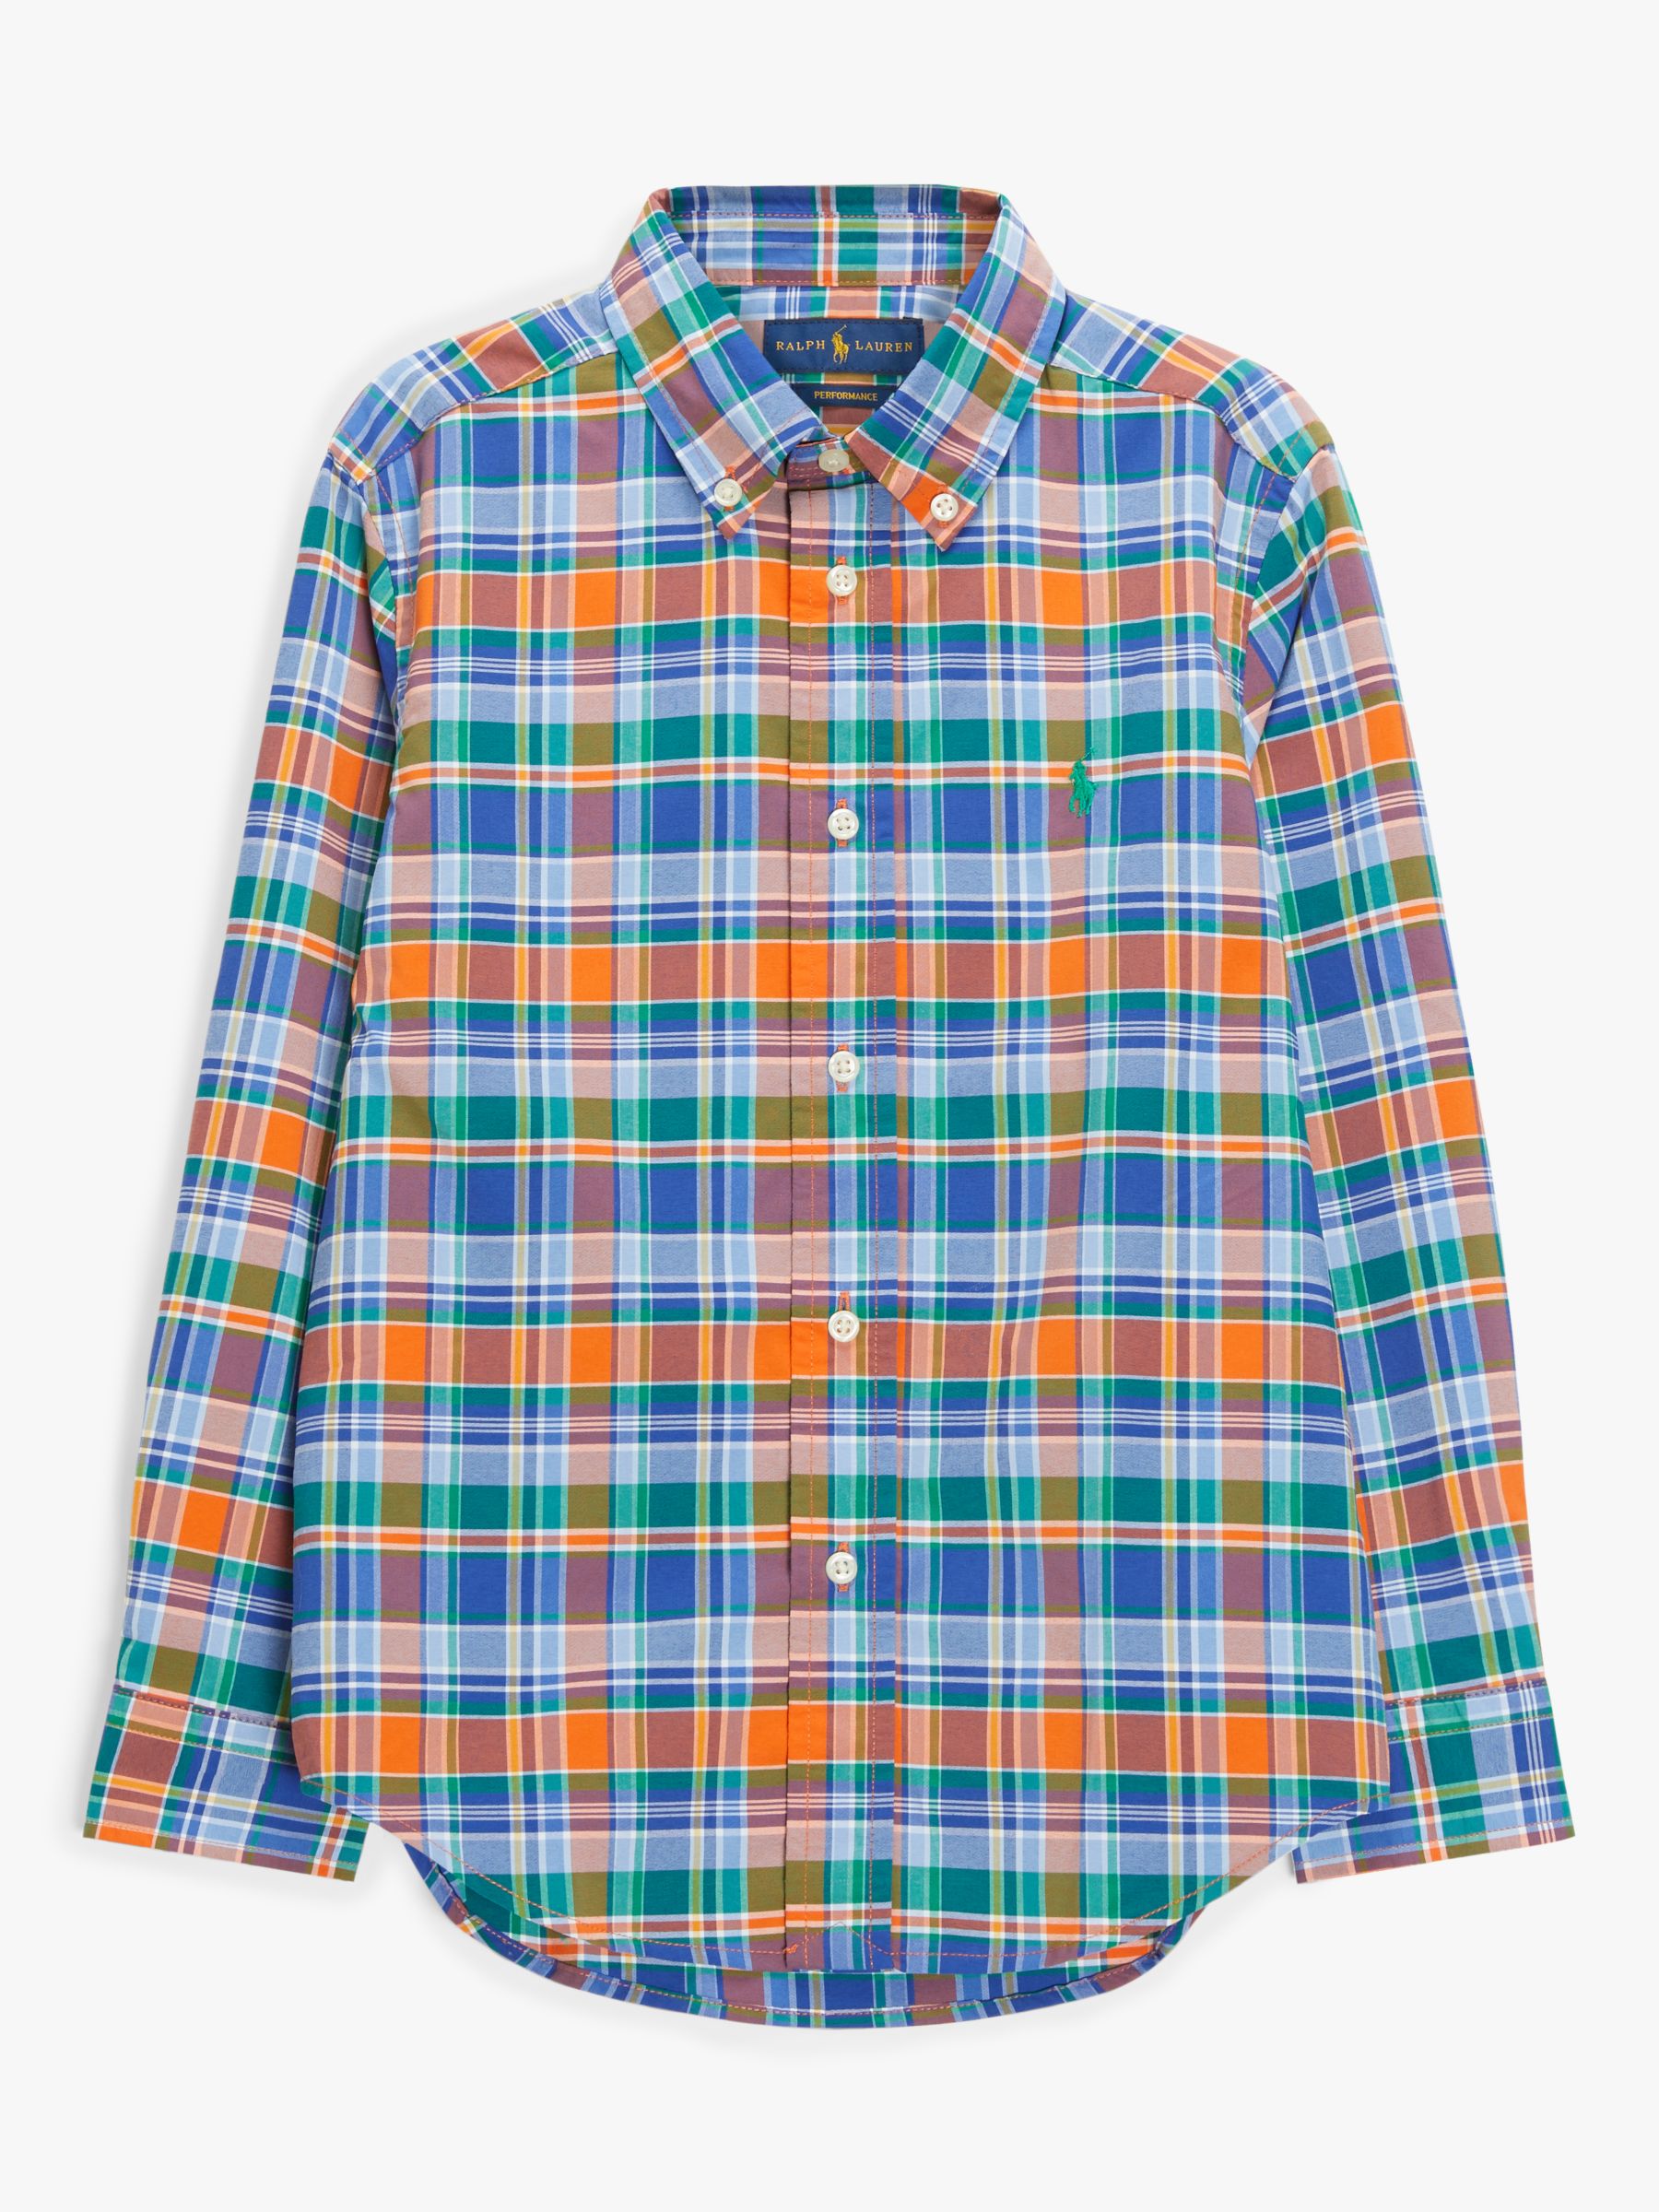 Image of Polo Ralph Lauren Boys Check Shirt Multi